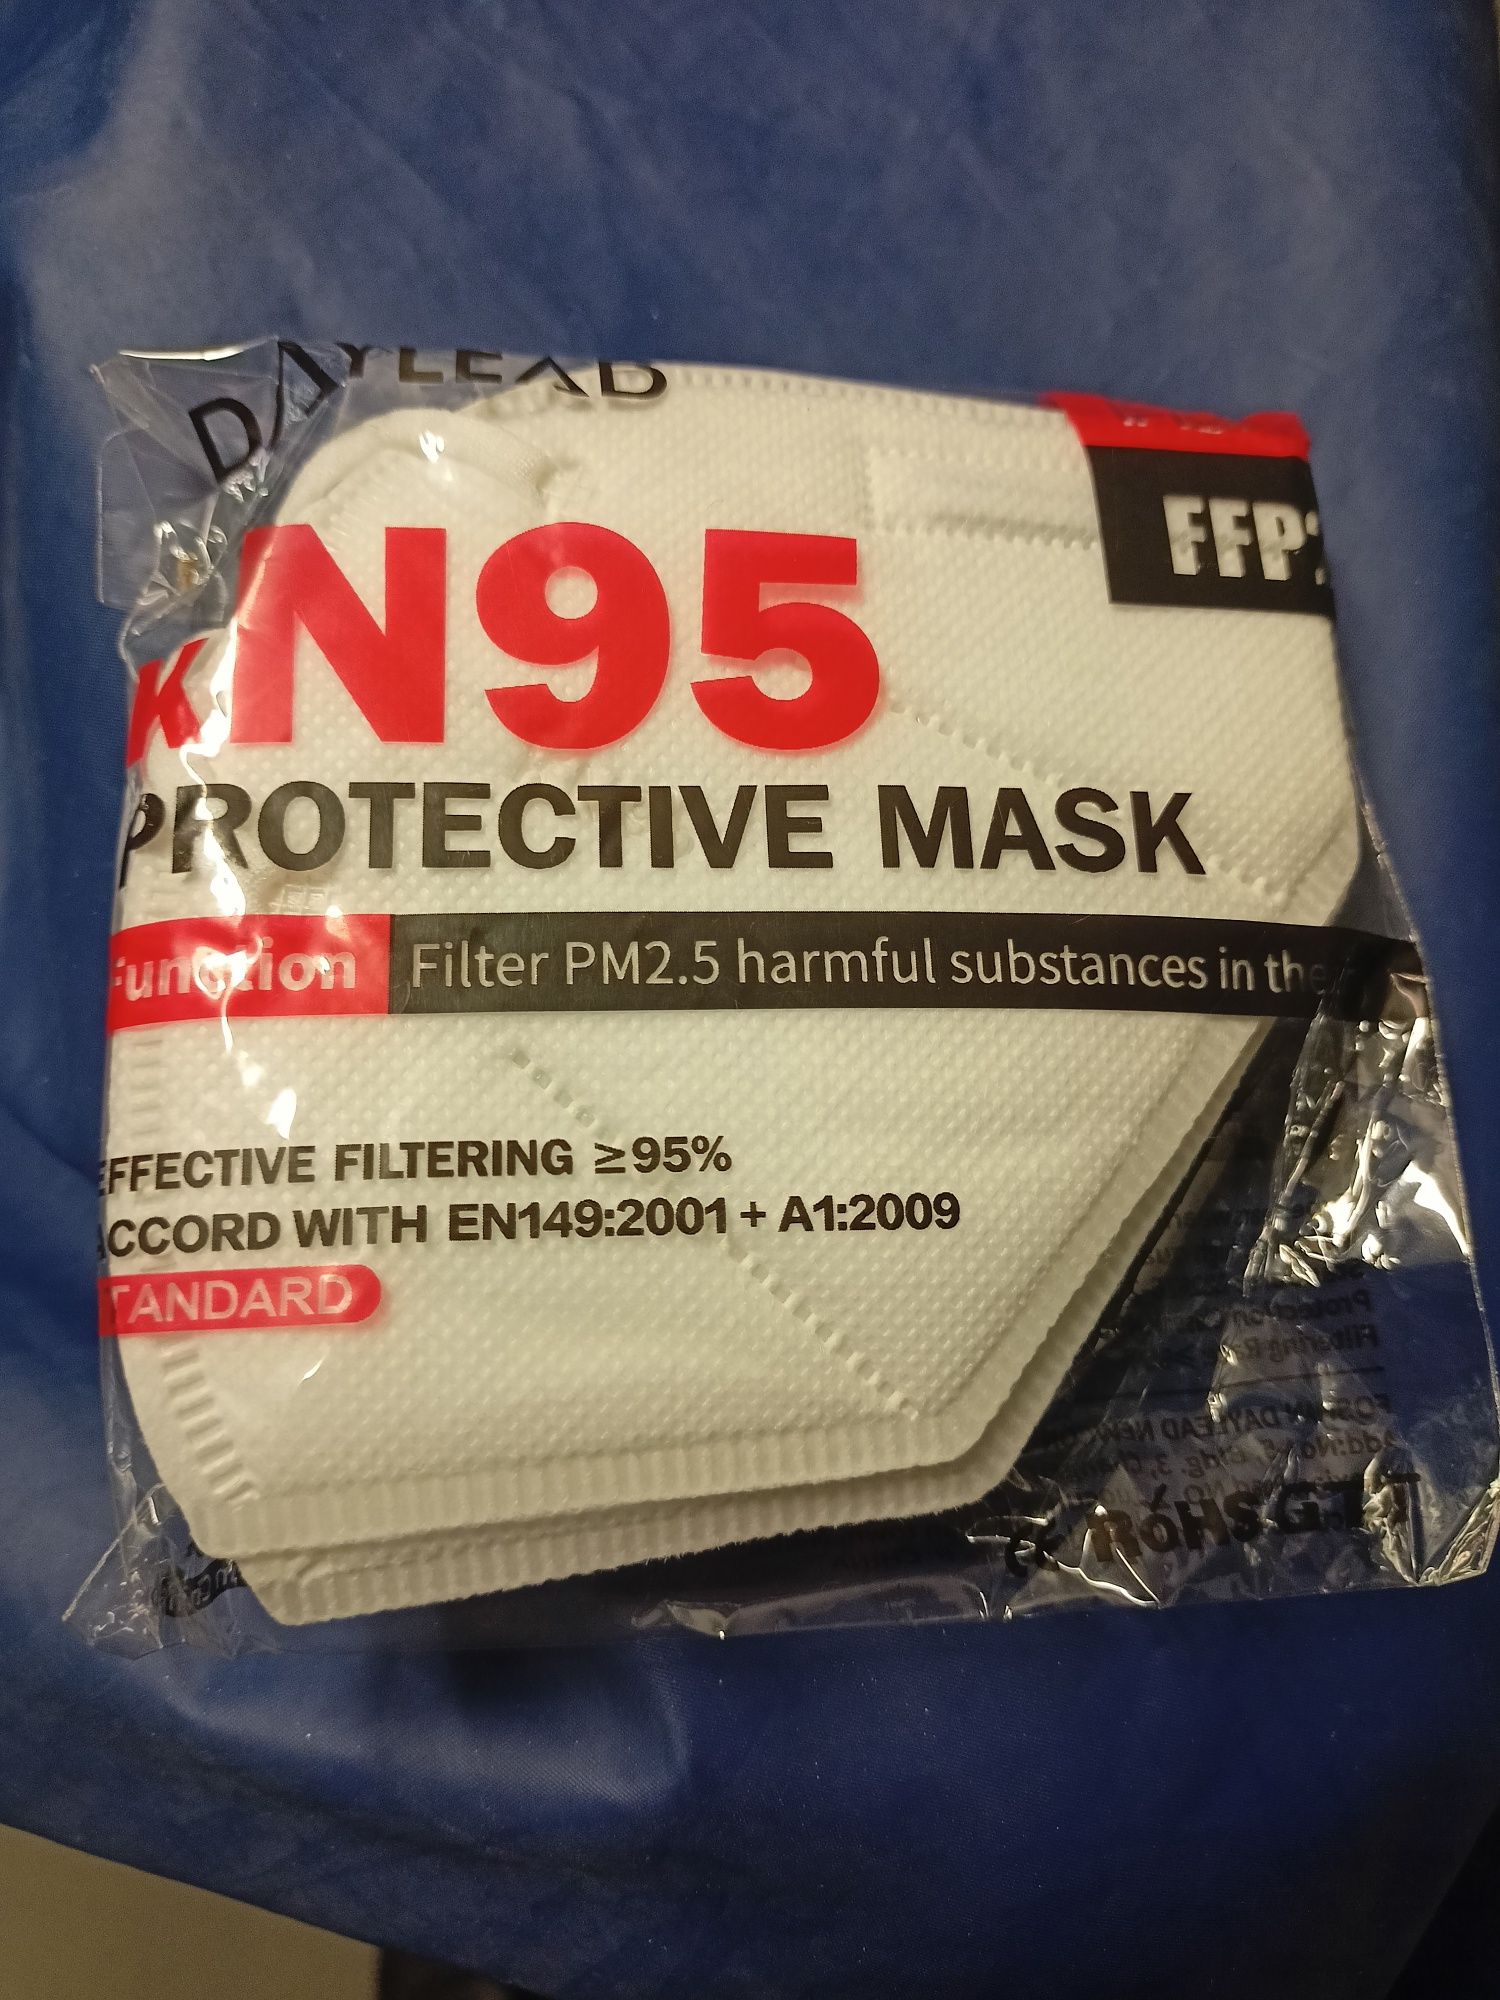 Maseczki protective mask kN95